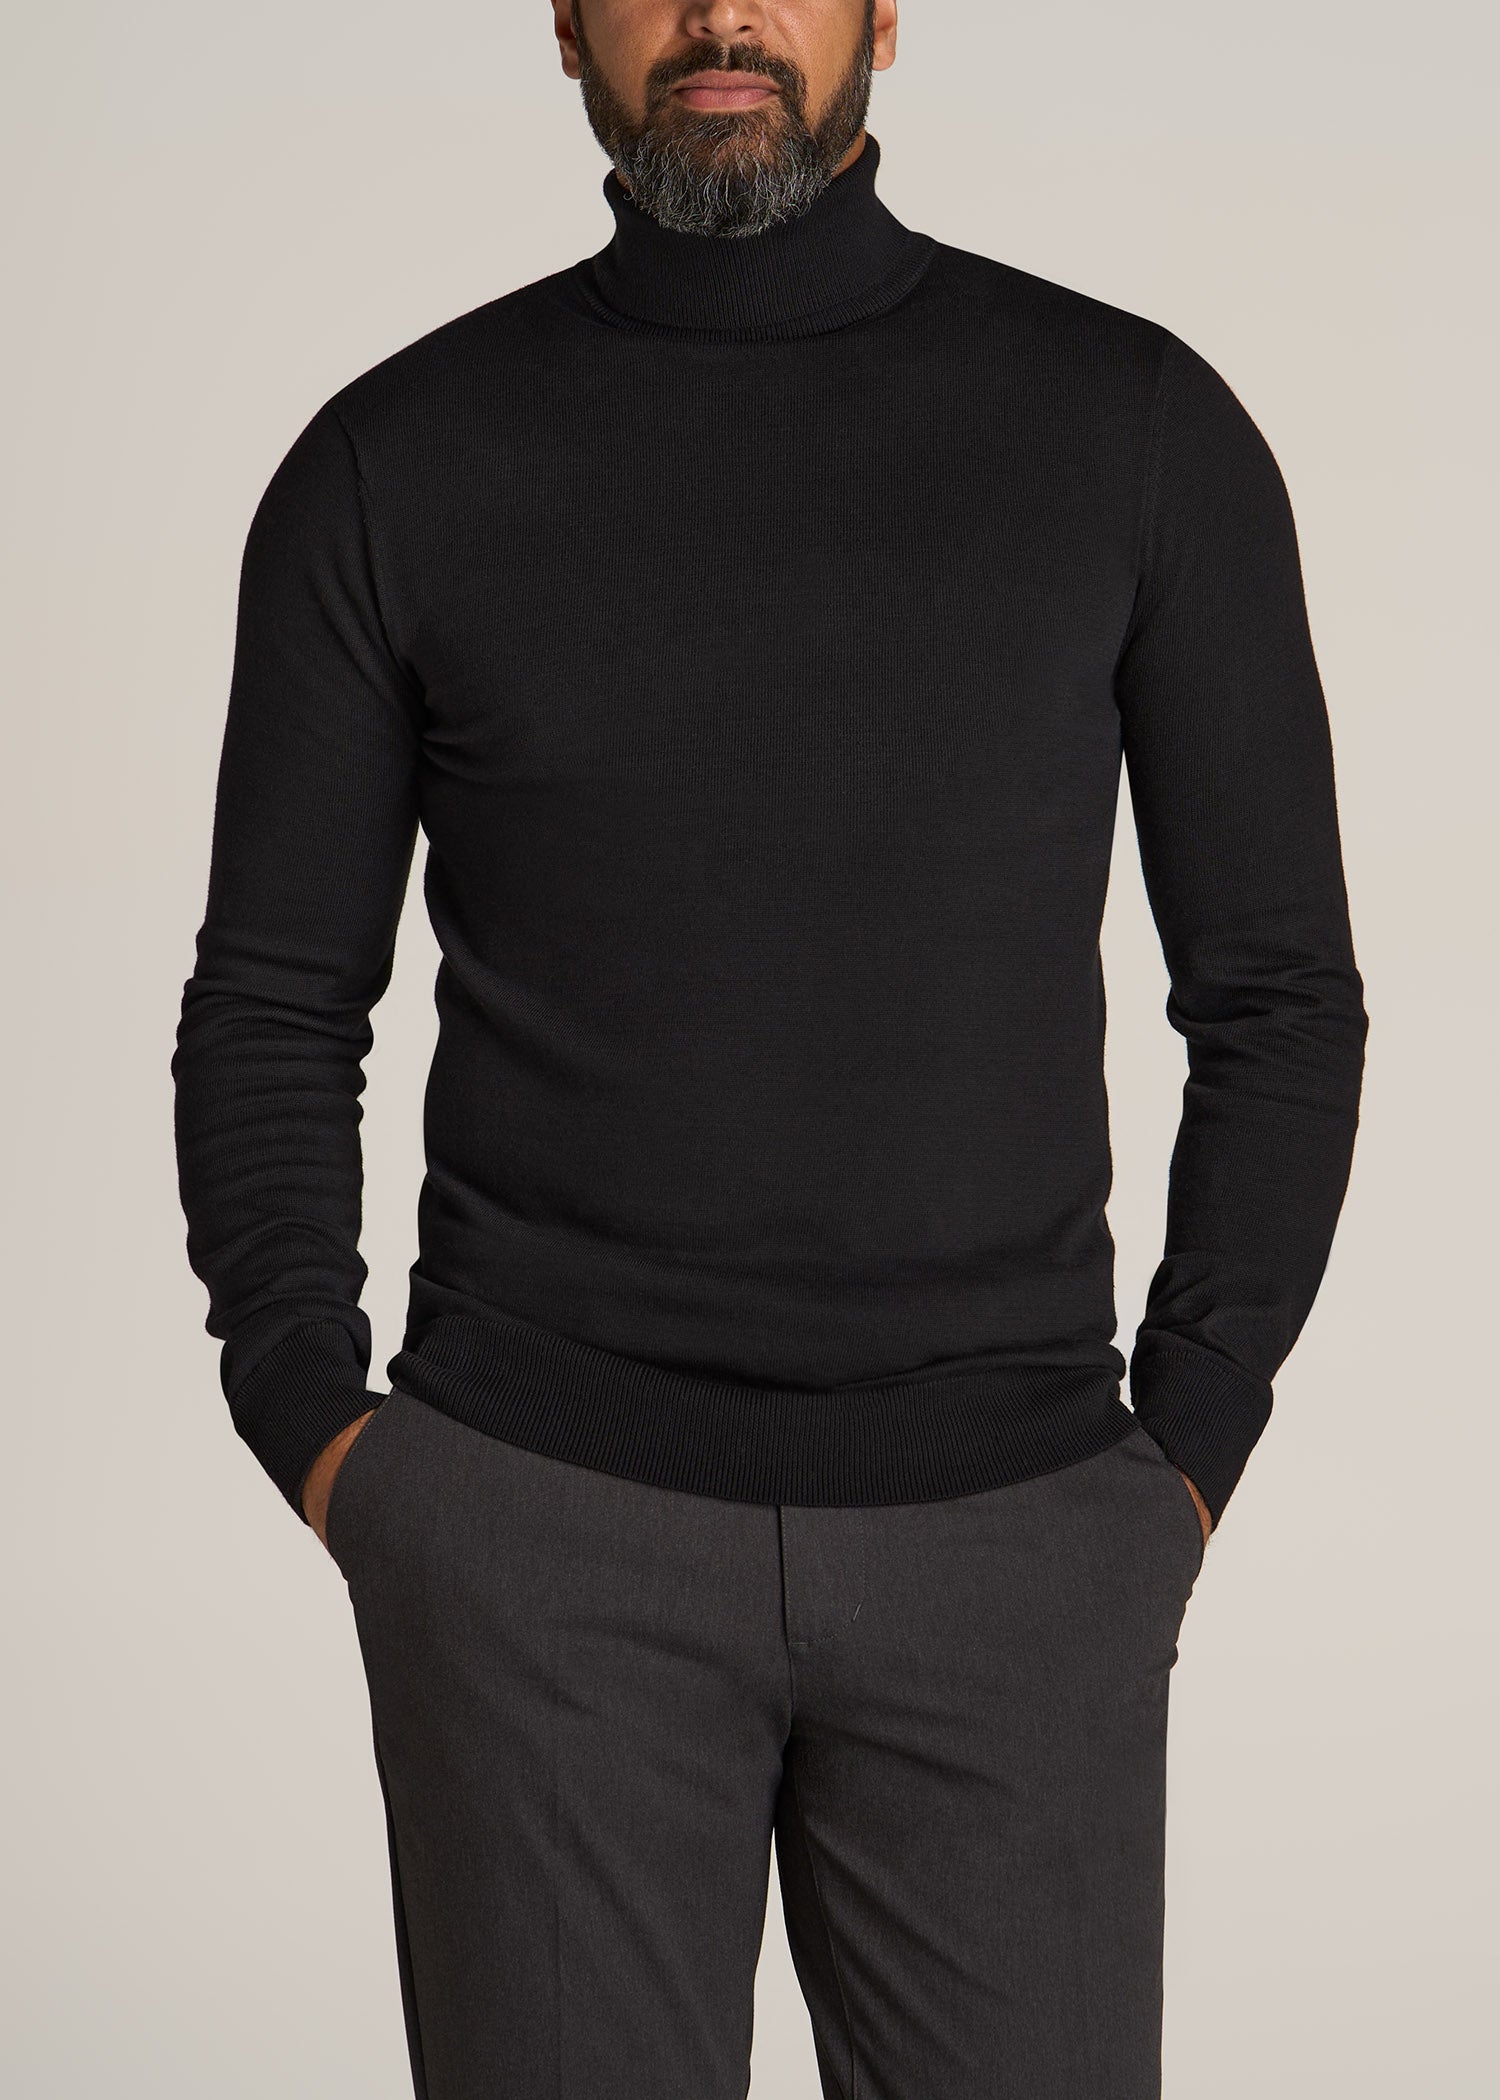 Men's Tall Turtleneck Sweater in Black